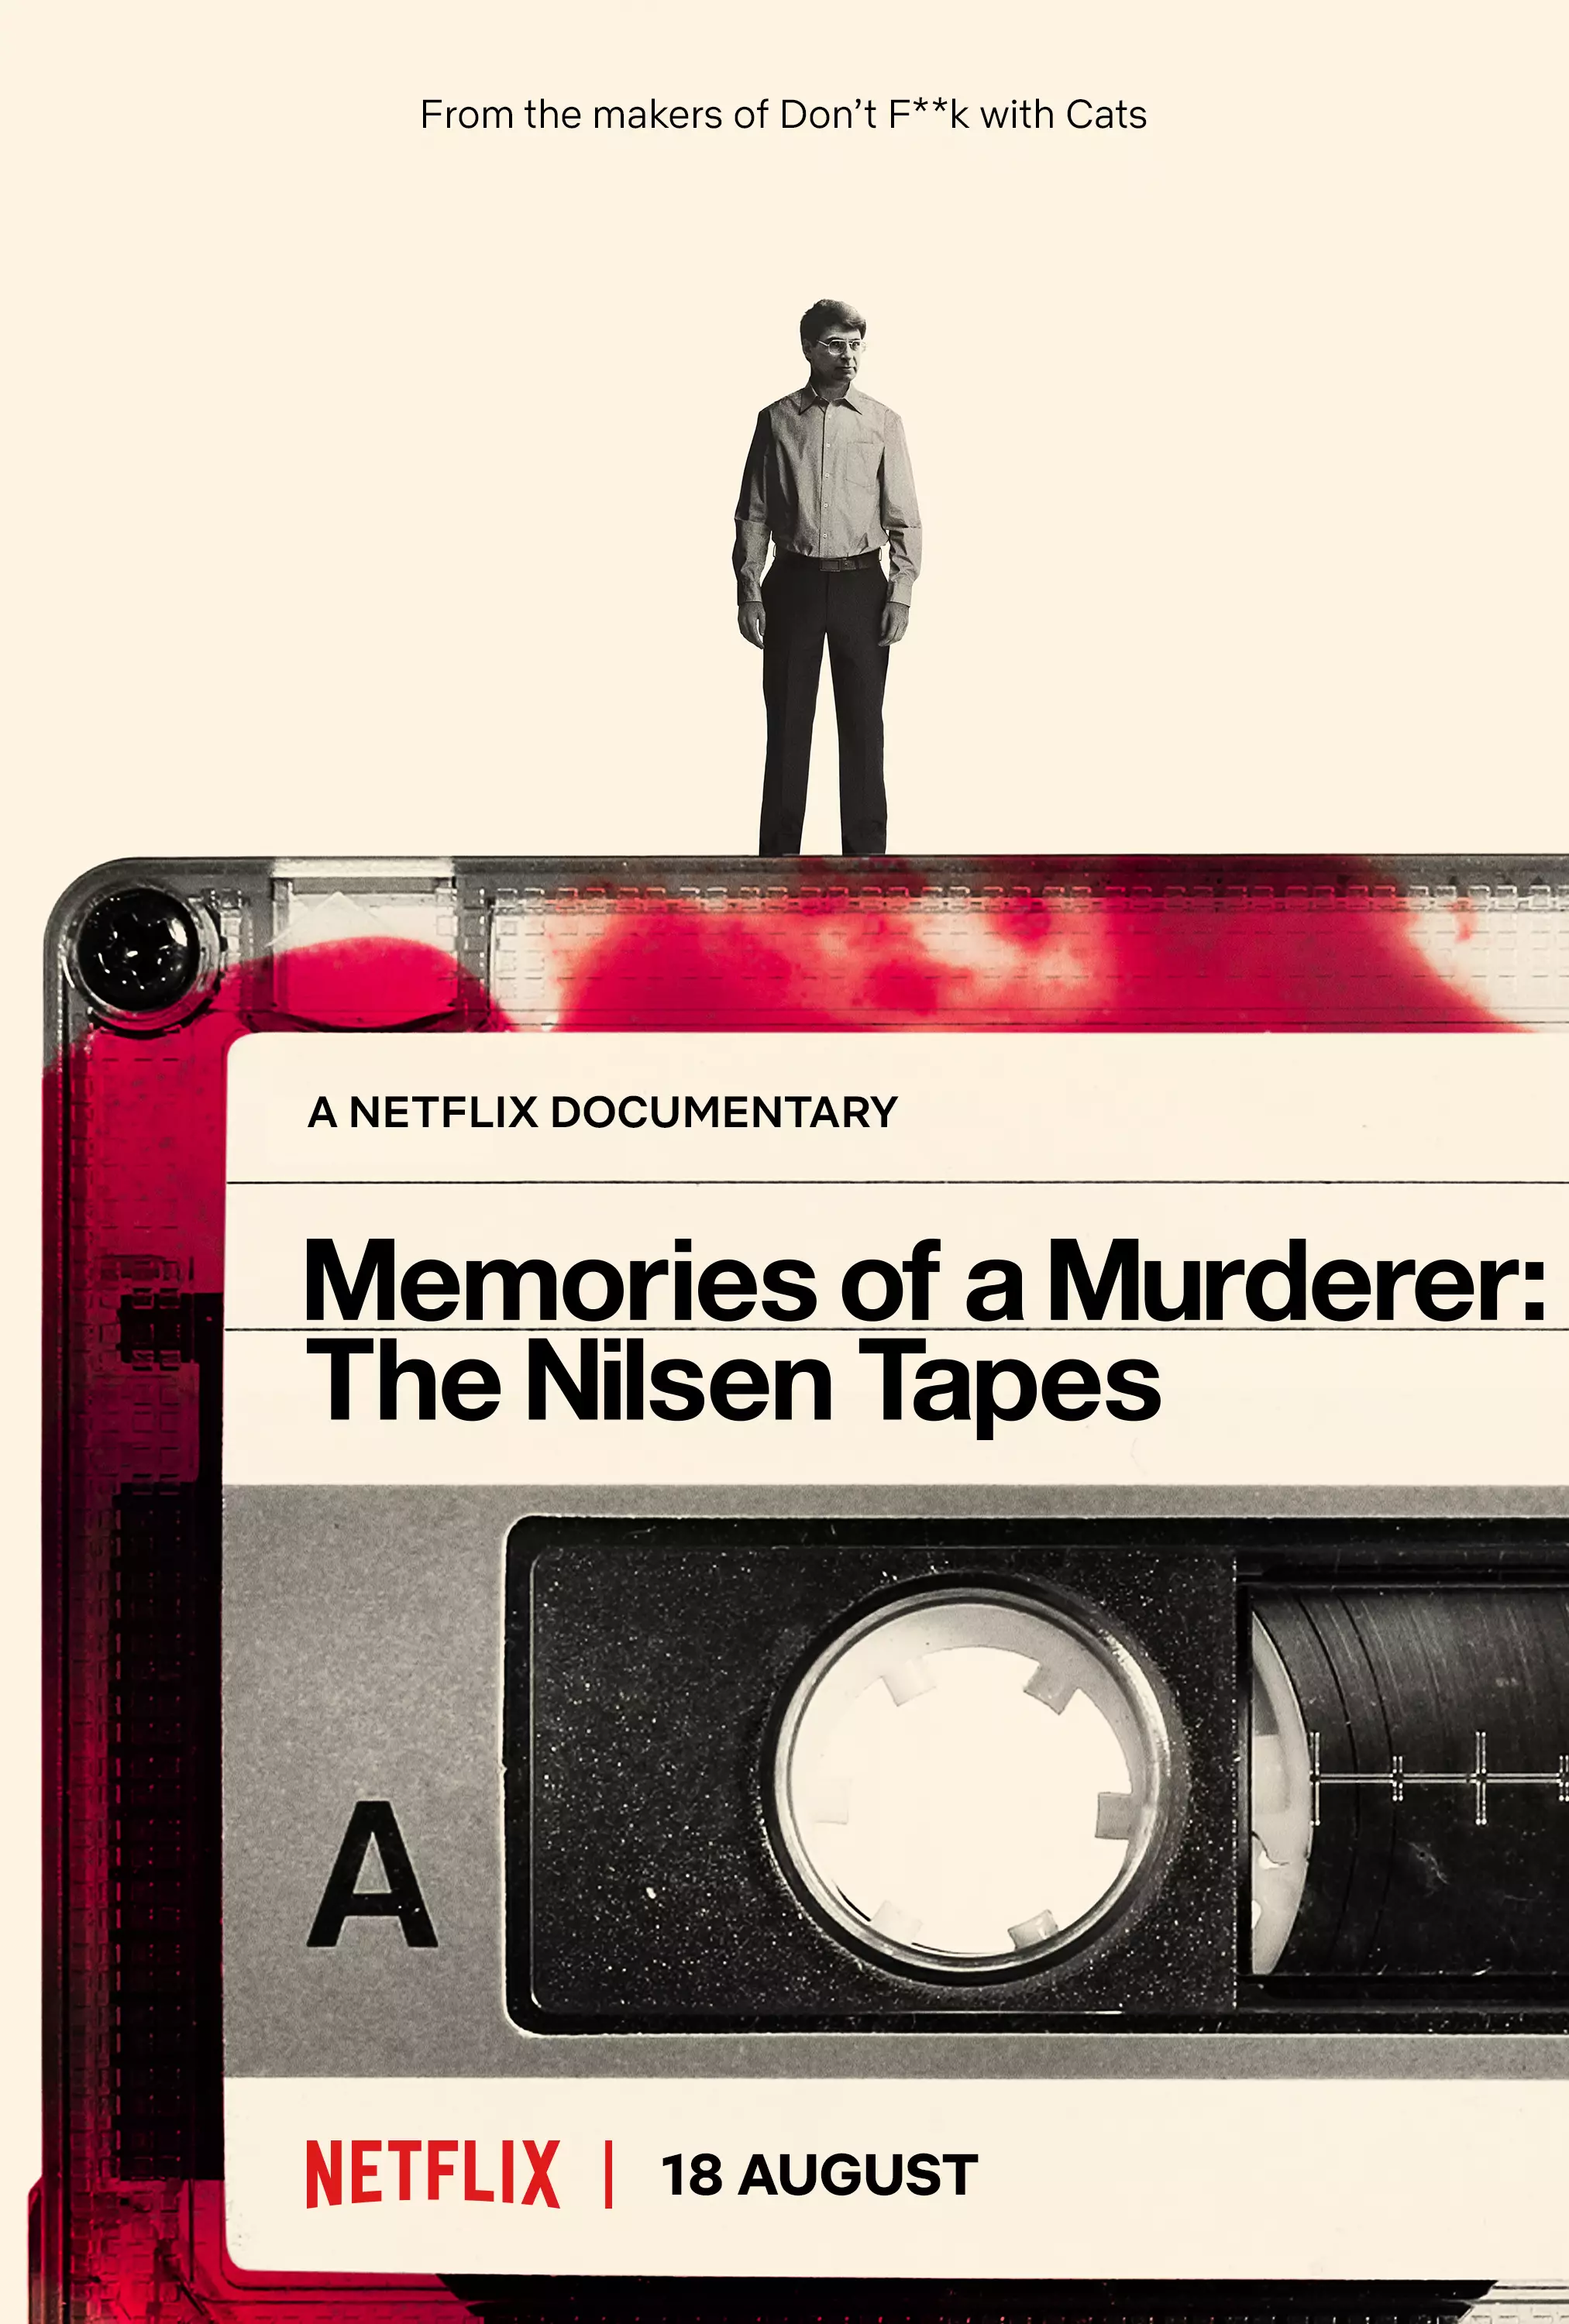 The new documentary includes never before heard recordings of the murderer Dennis Nilsen.